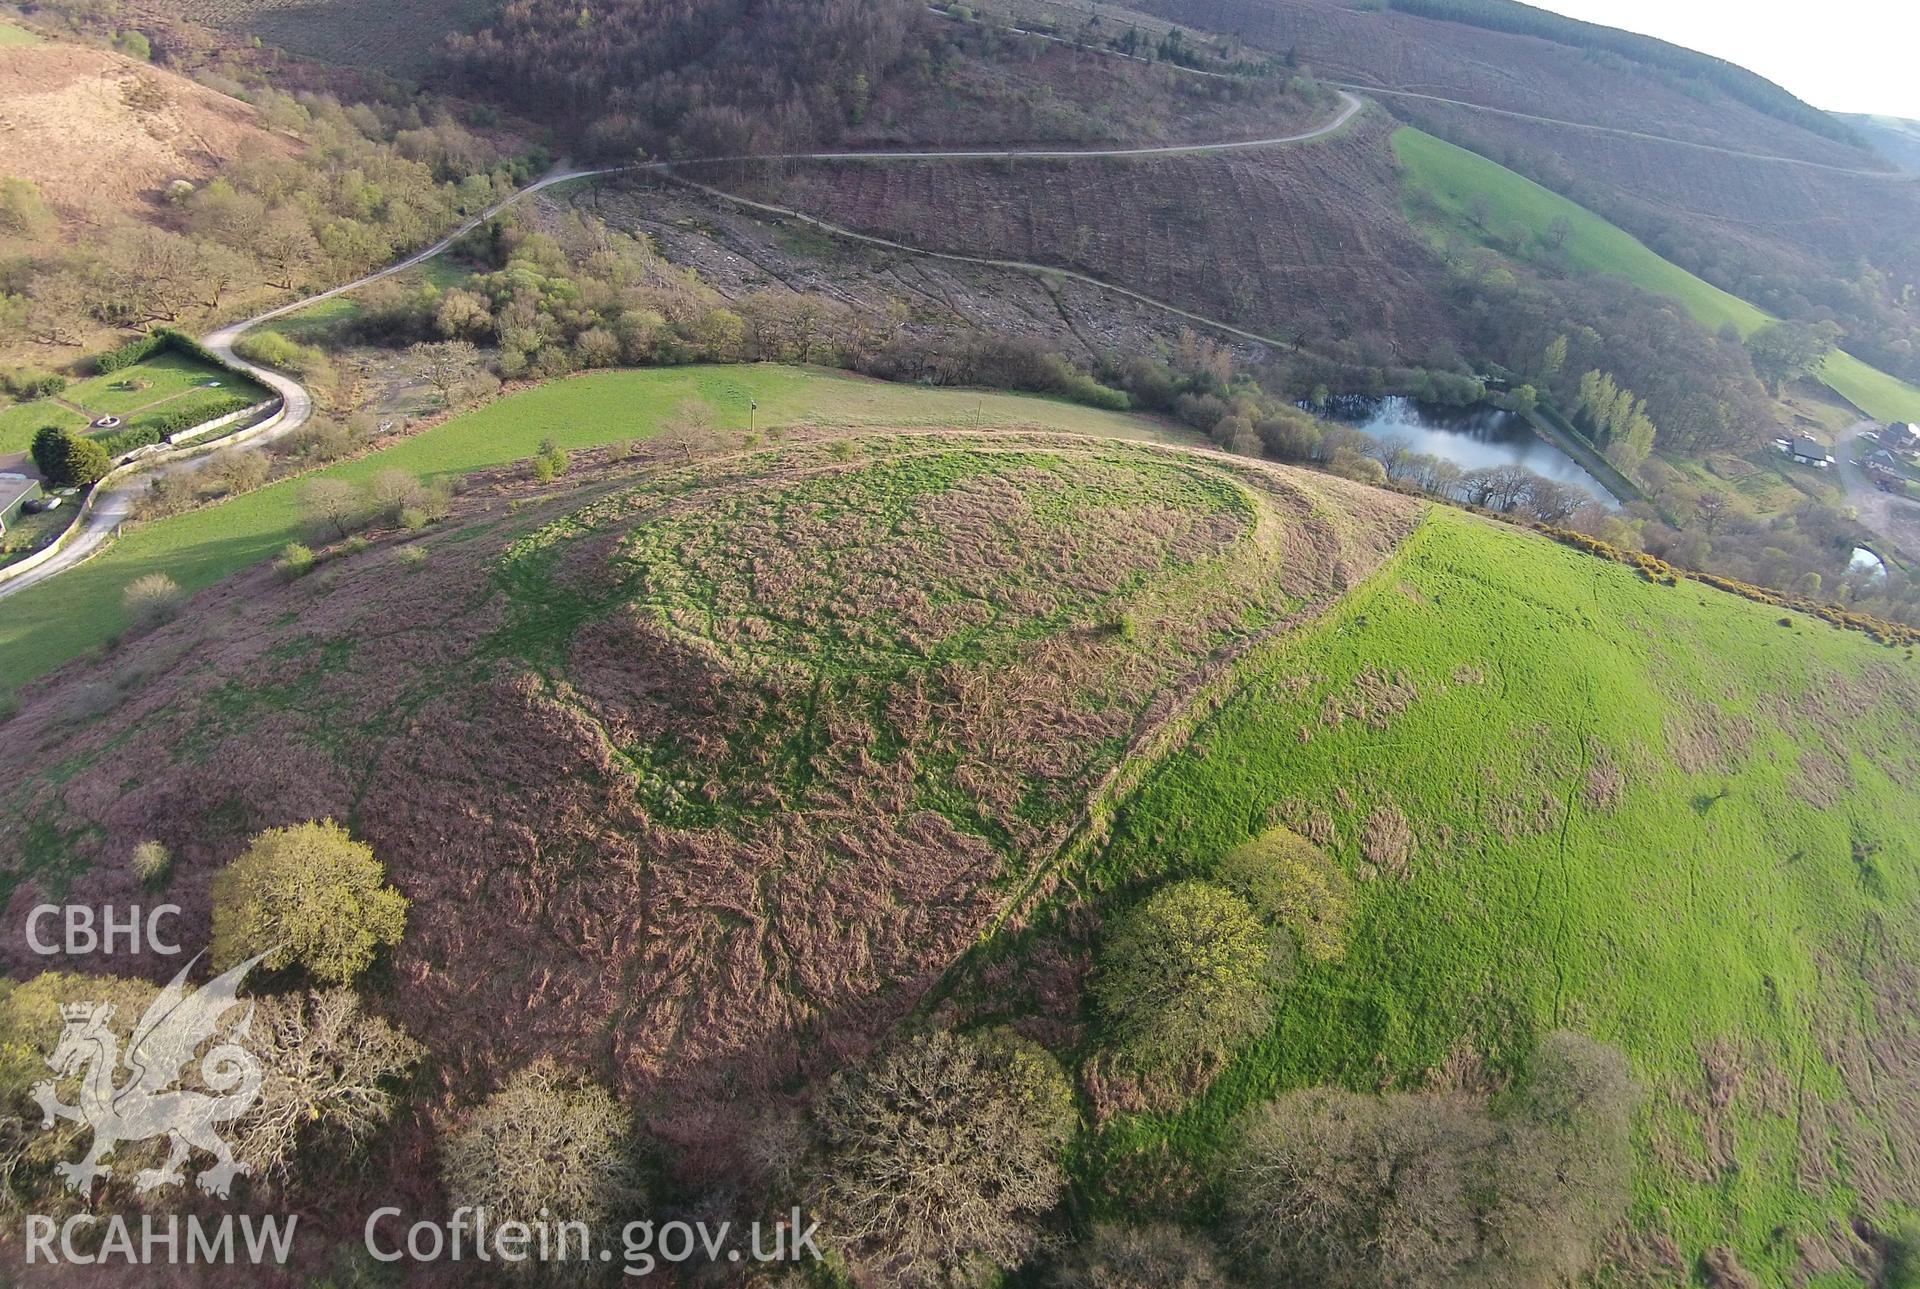 Digital aerial photograph showing Pen y Castell enclosure near Cwmafan.